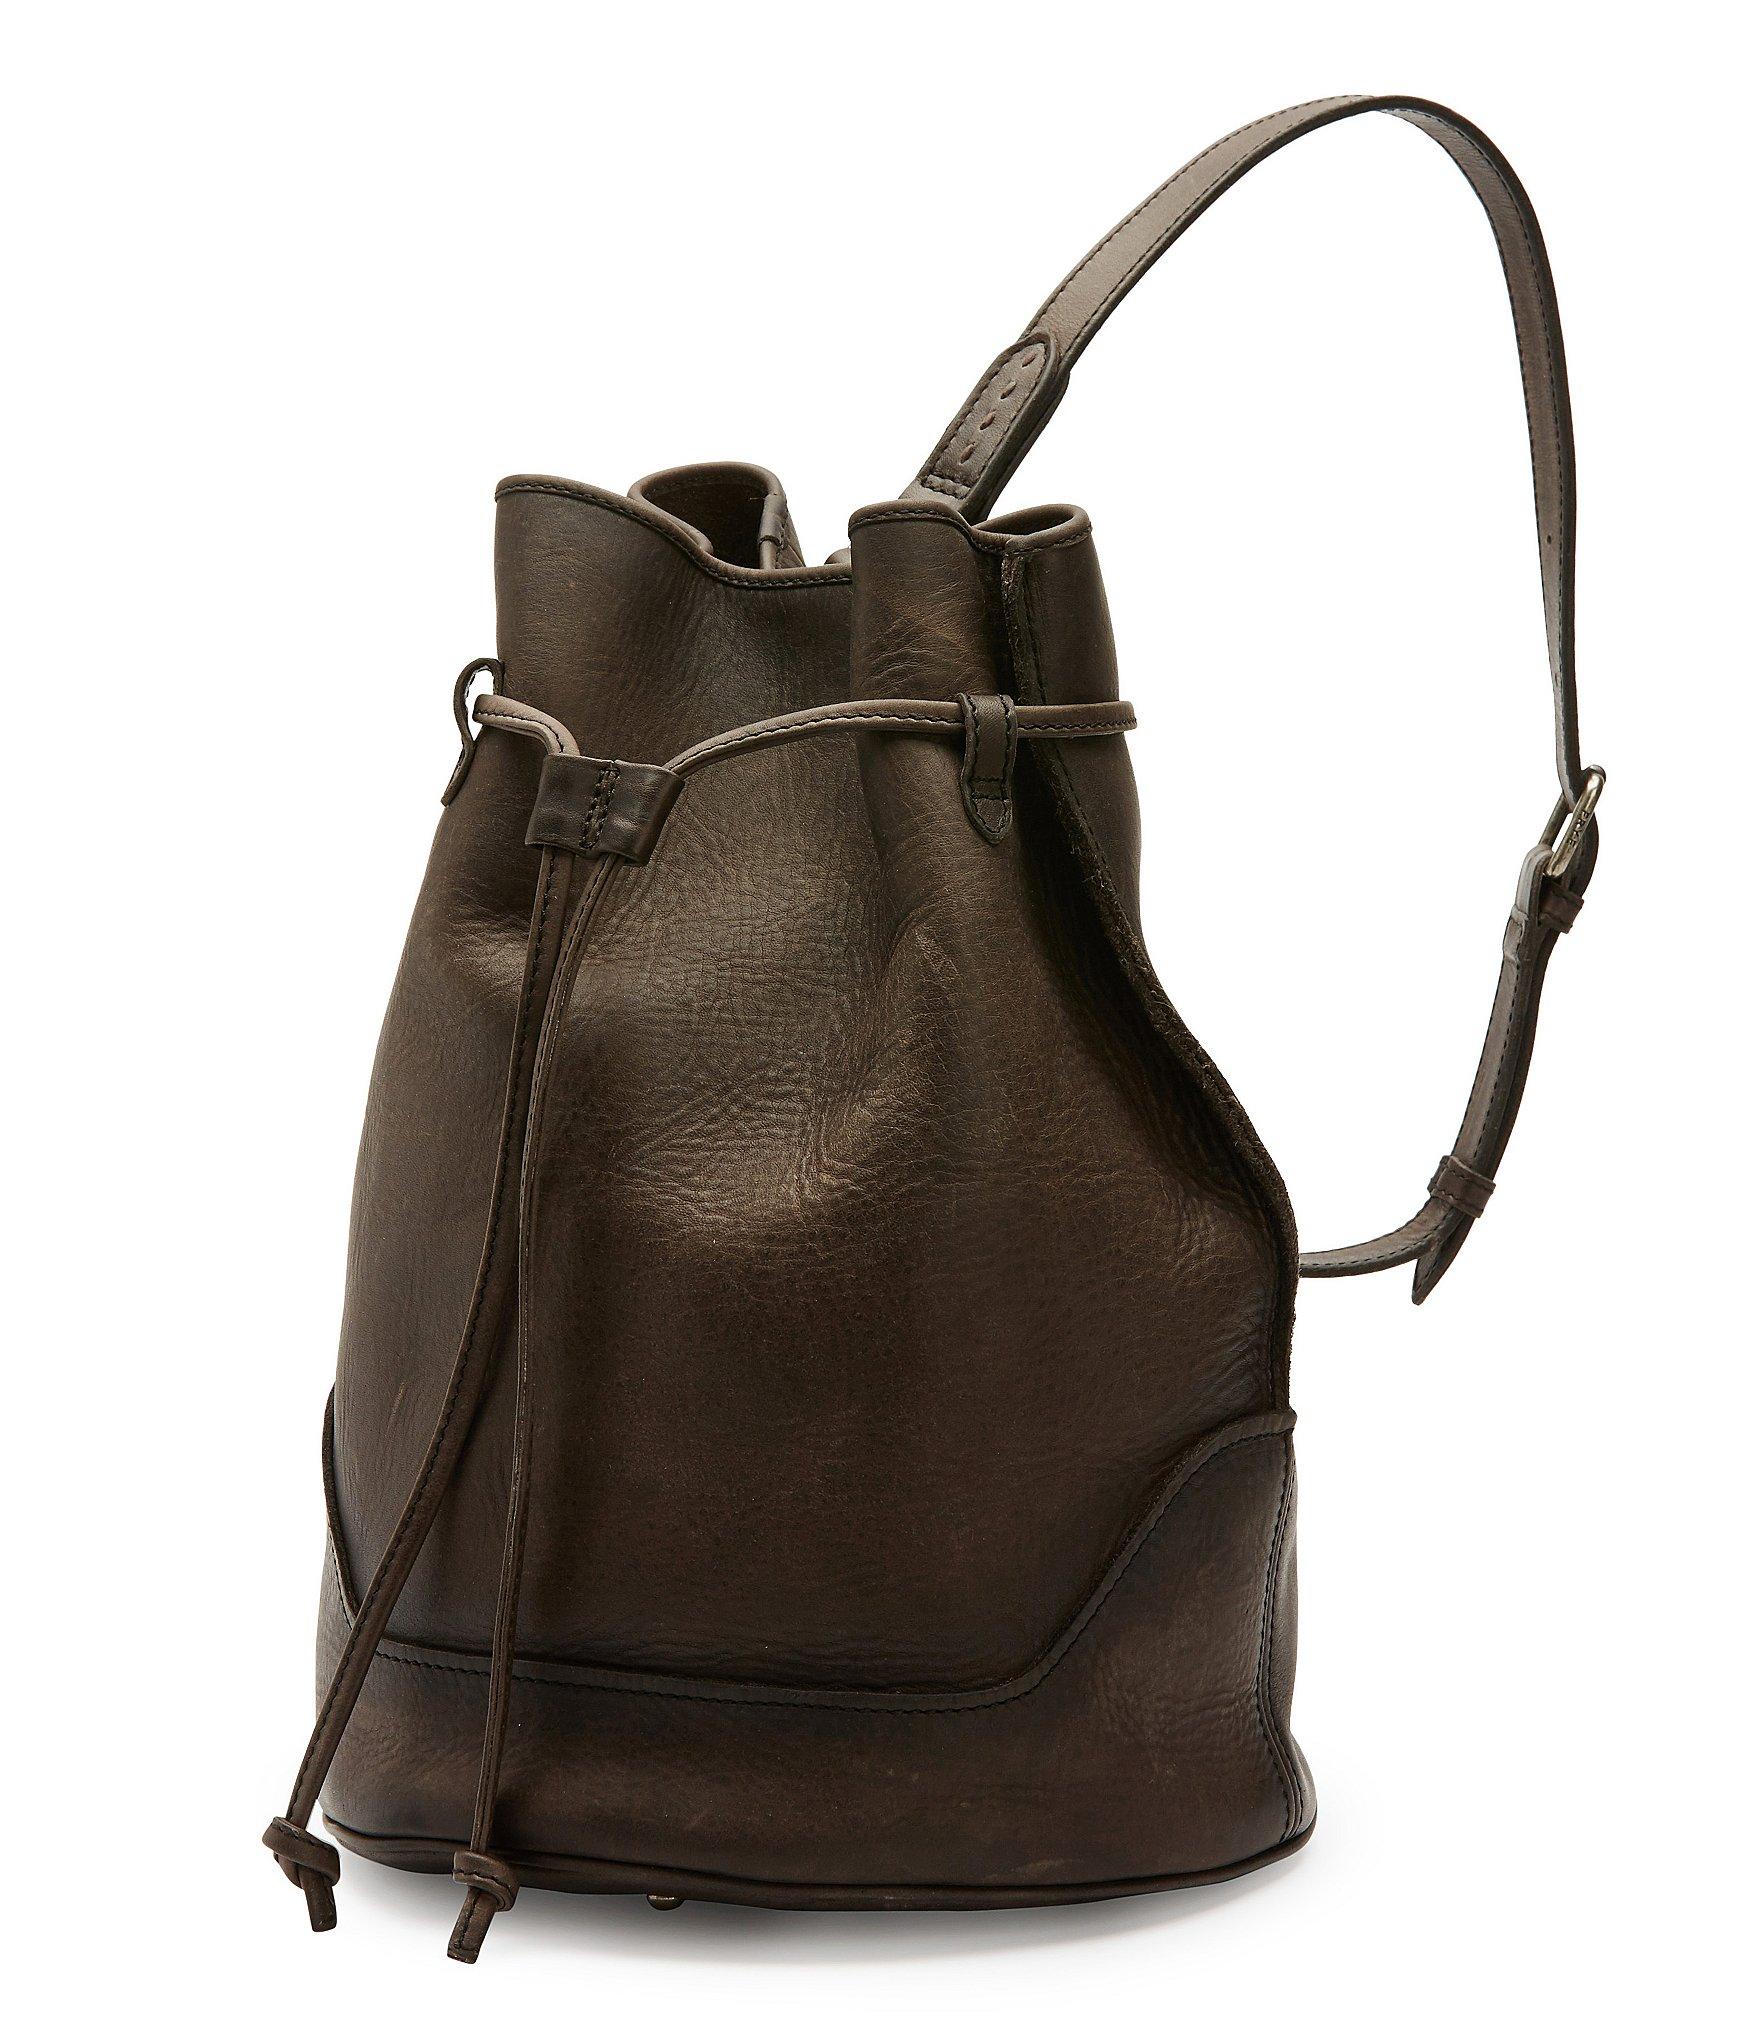 Lyst - Frye Cara Drawstring Bucket Bag in Brown